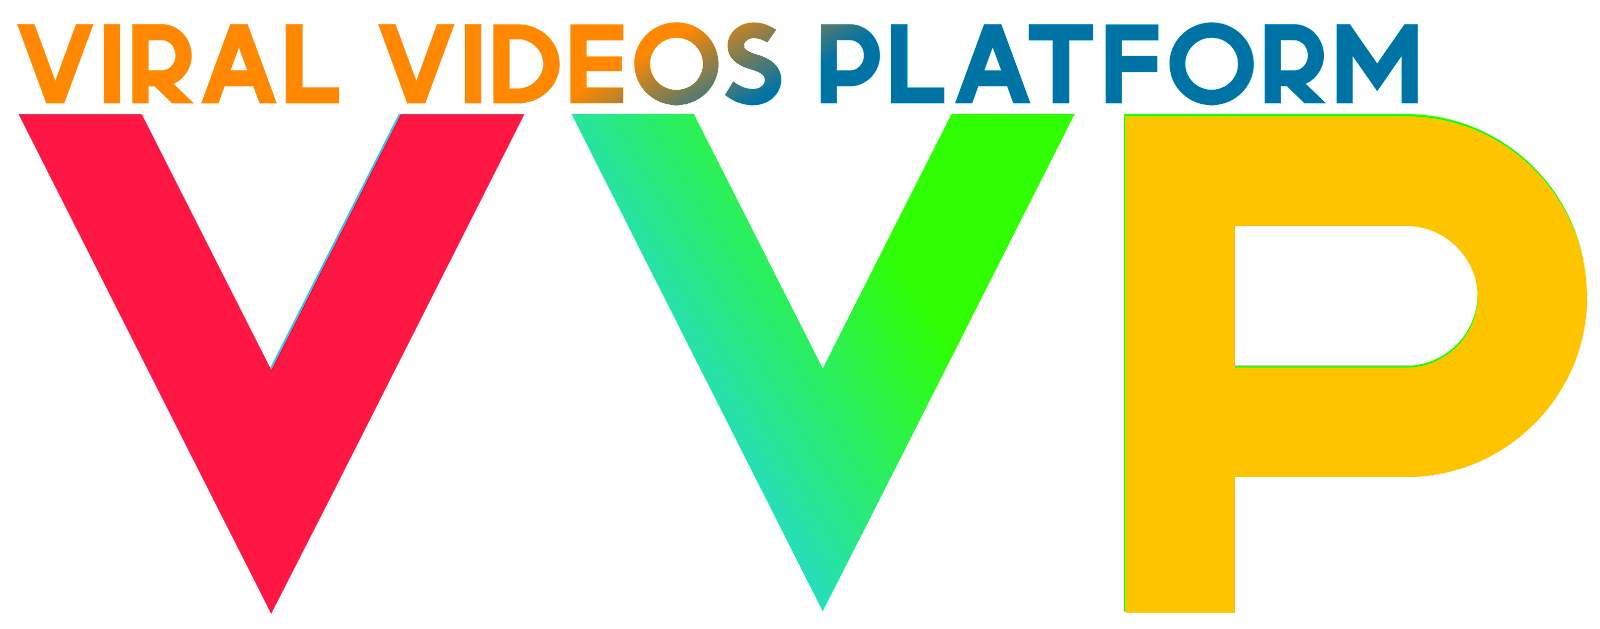 VVP - Viral Videos Platform